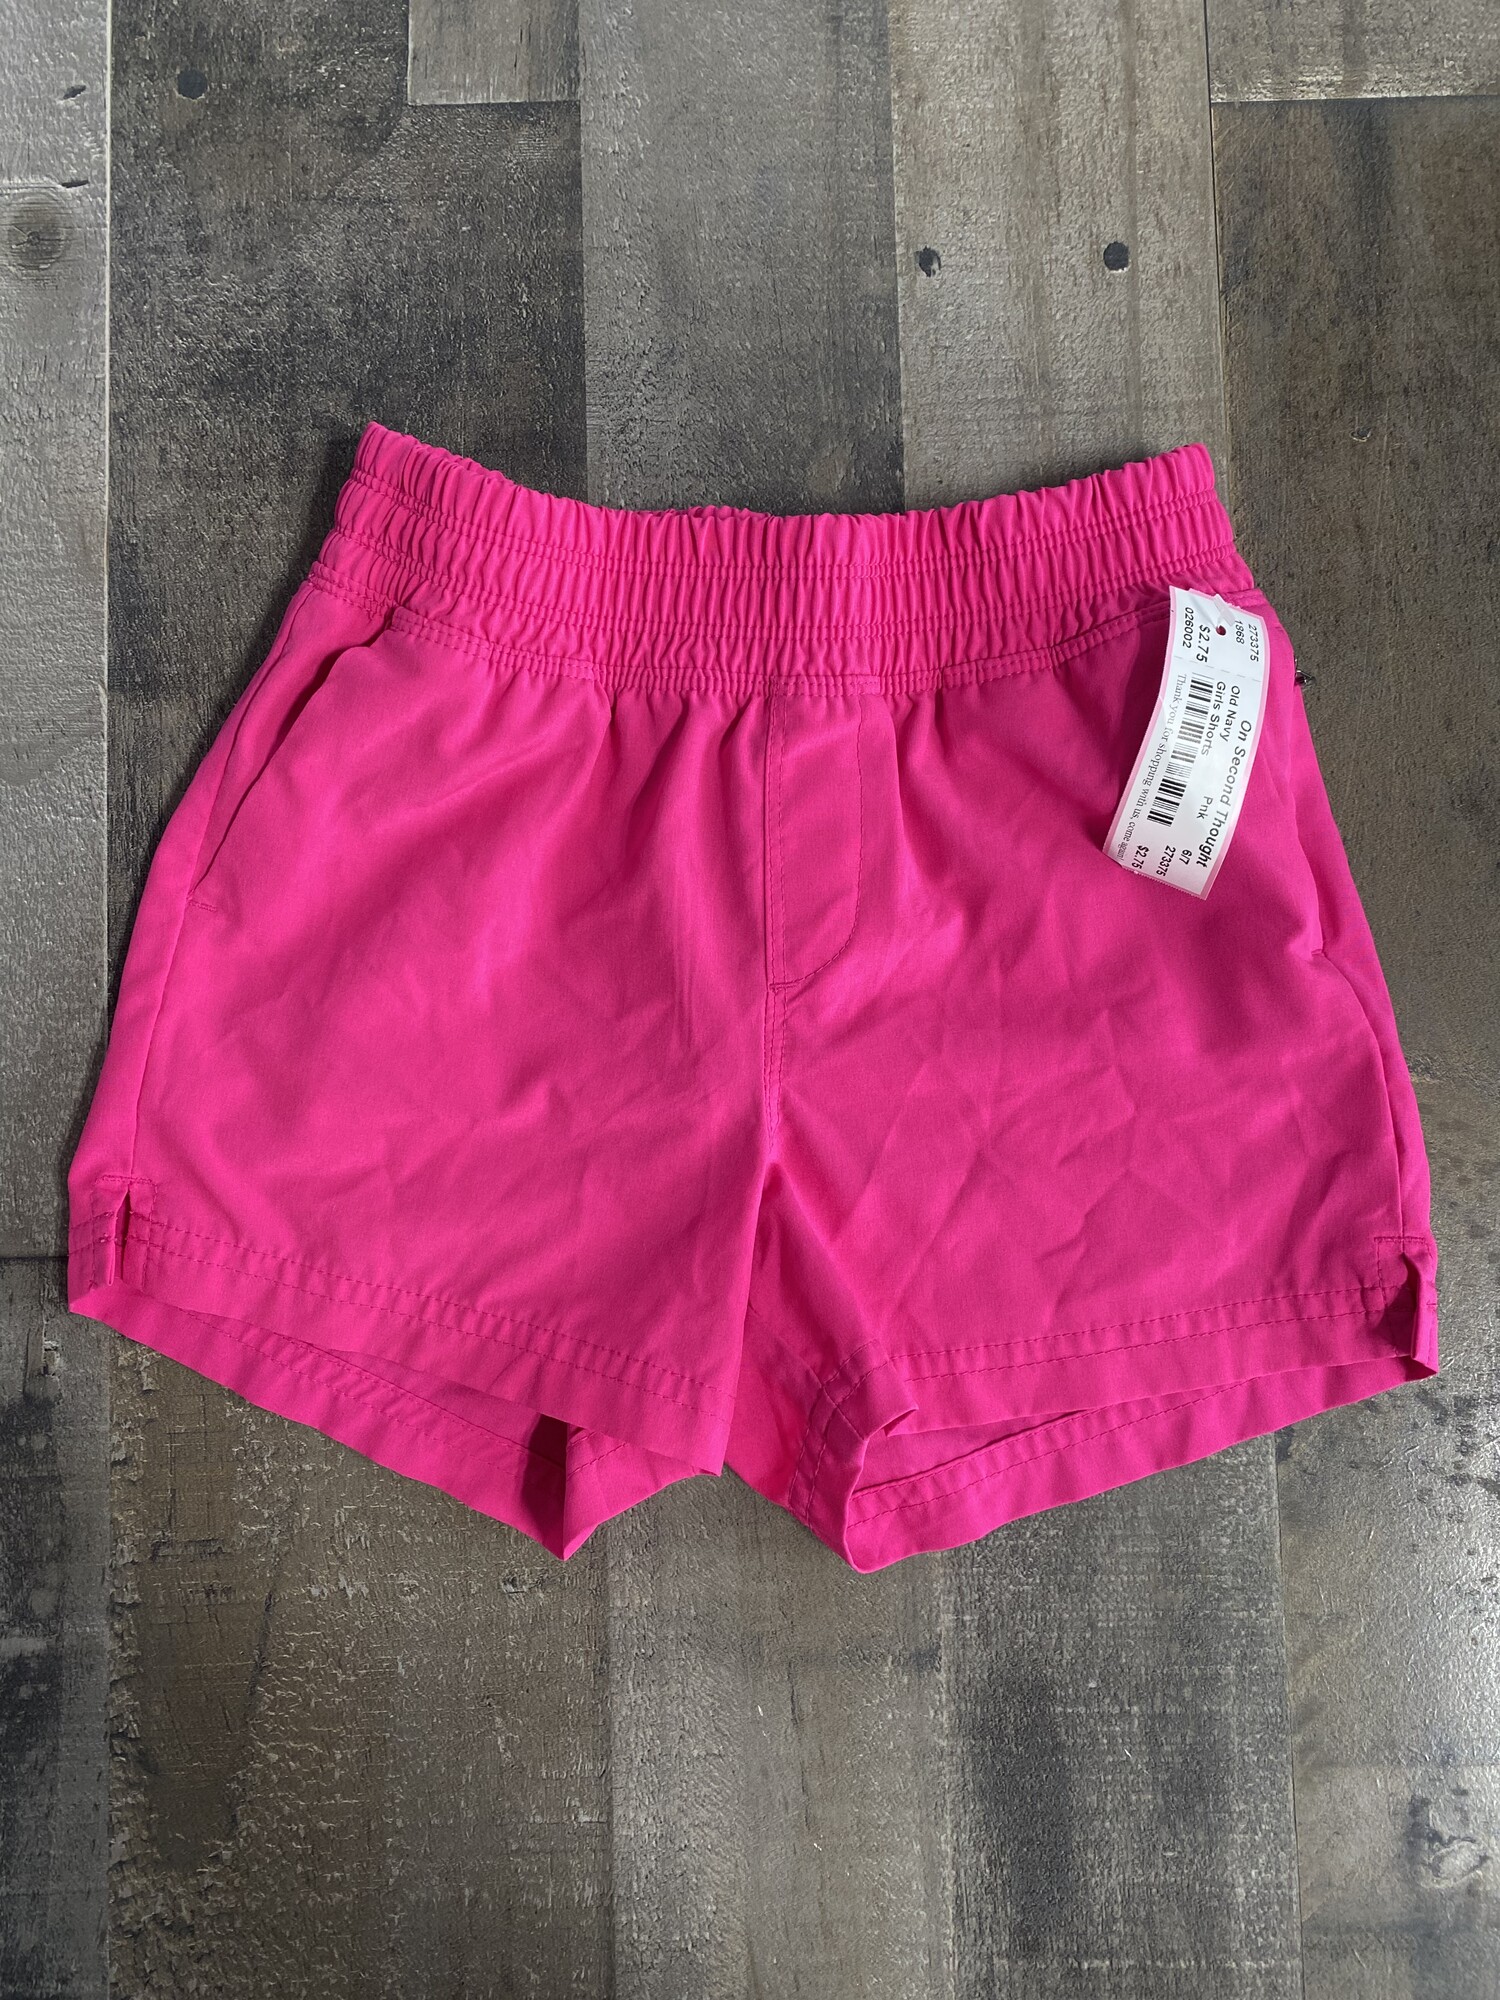 Girls Athletic Shorts, Pink, Size: 6/7